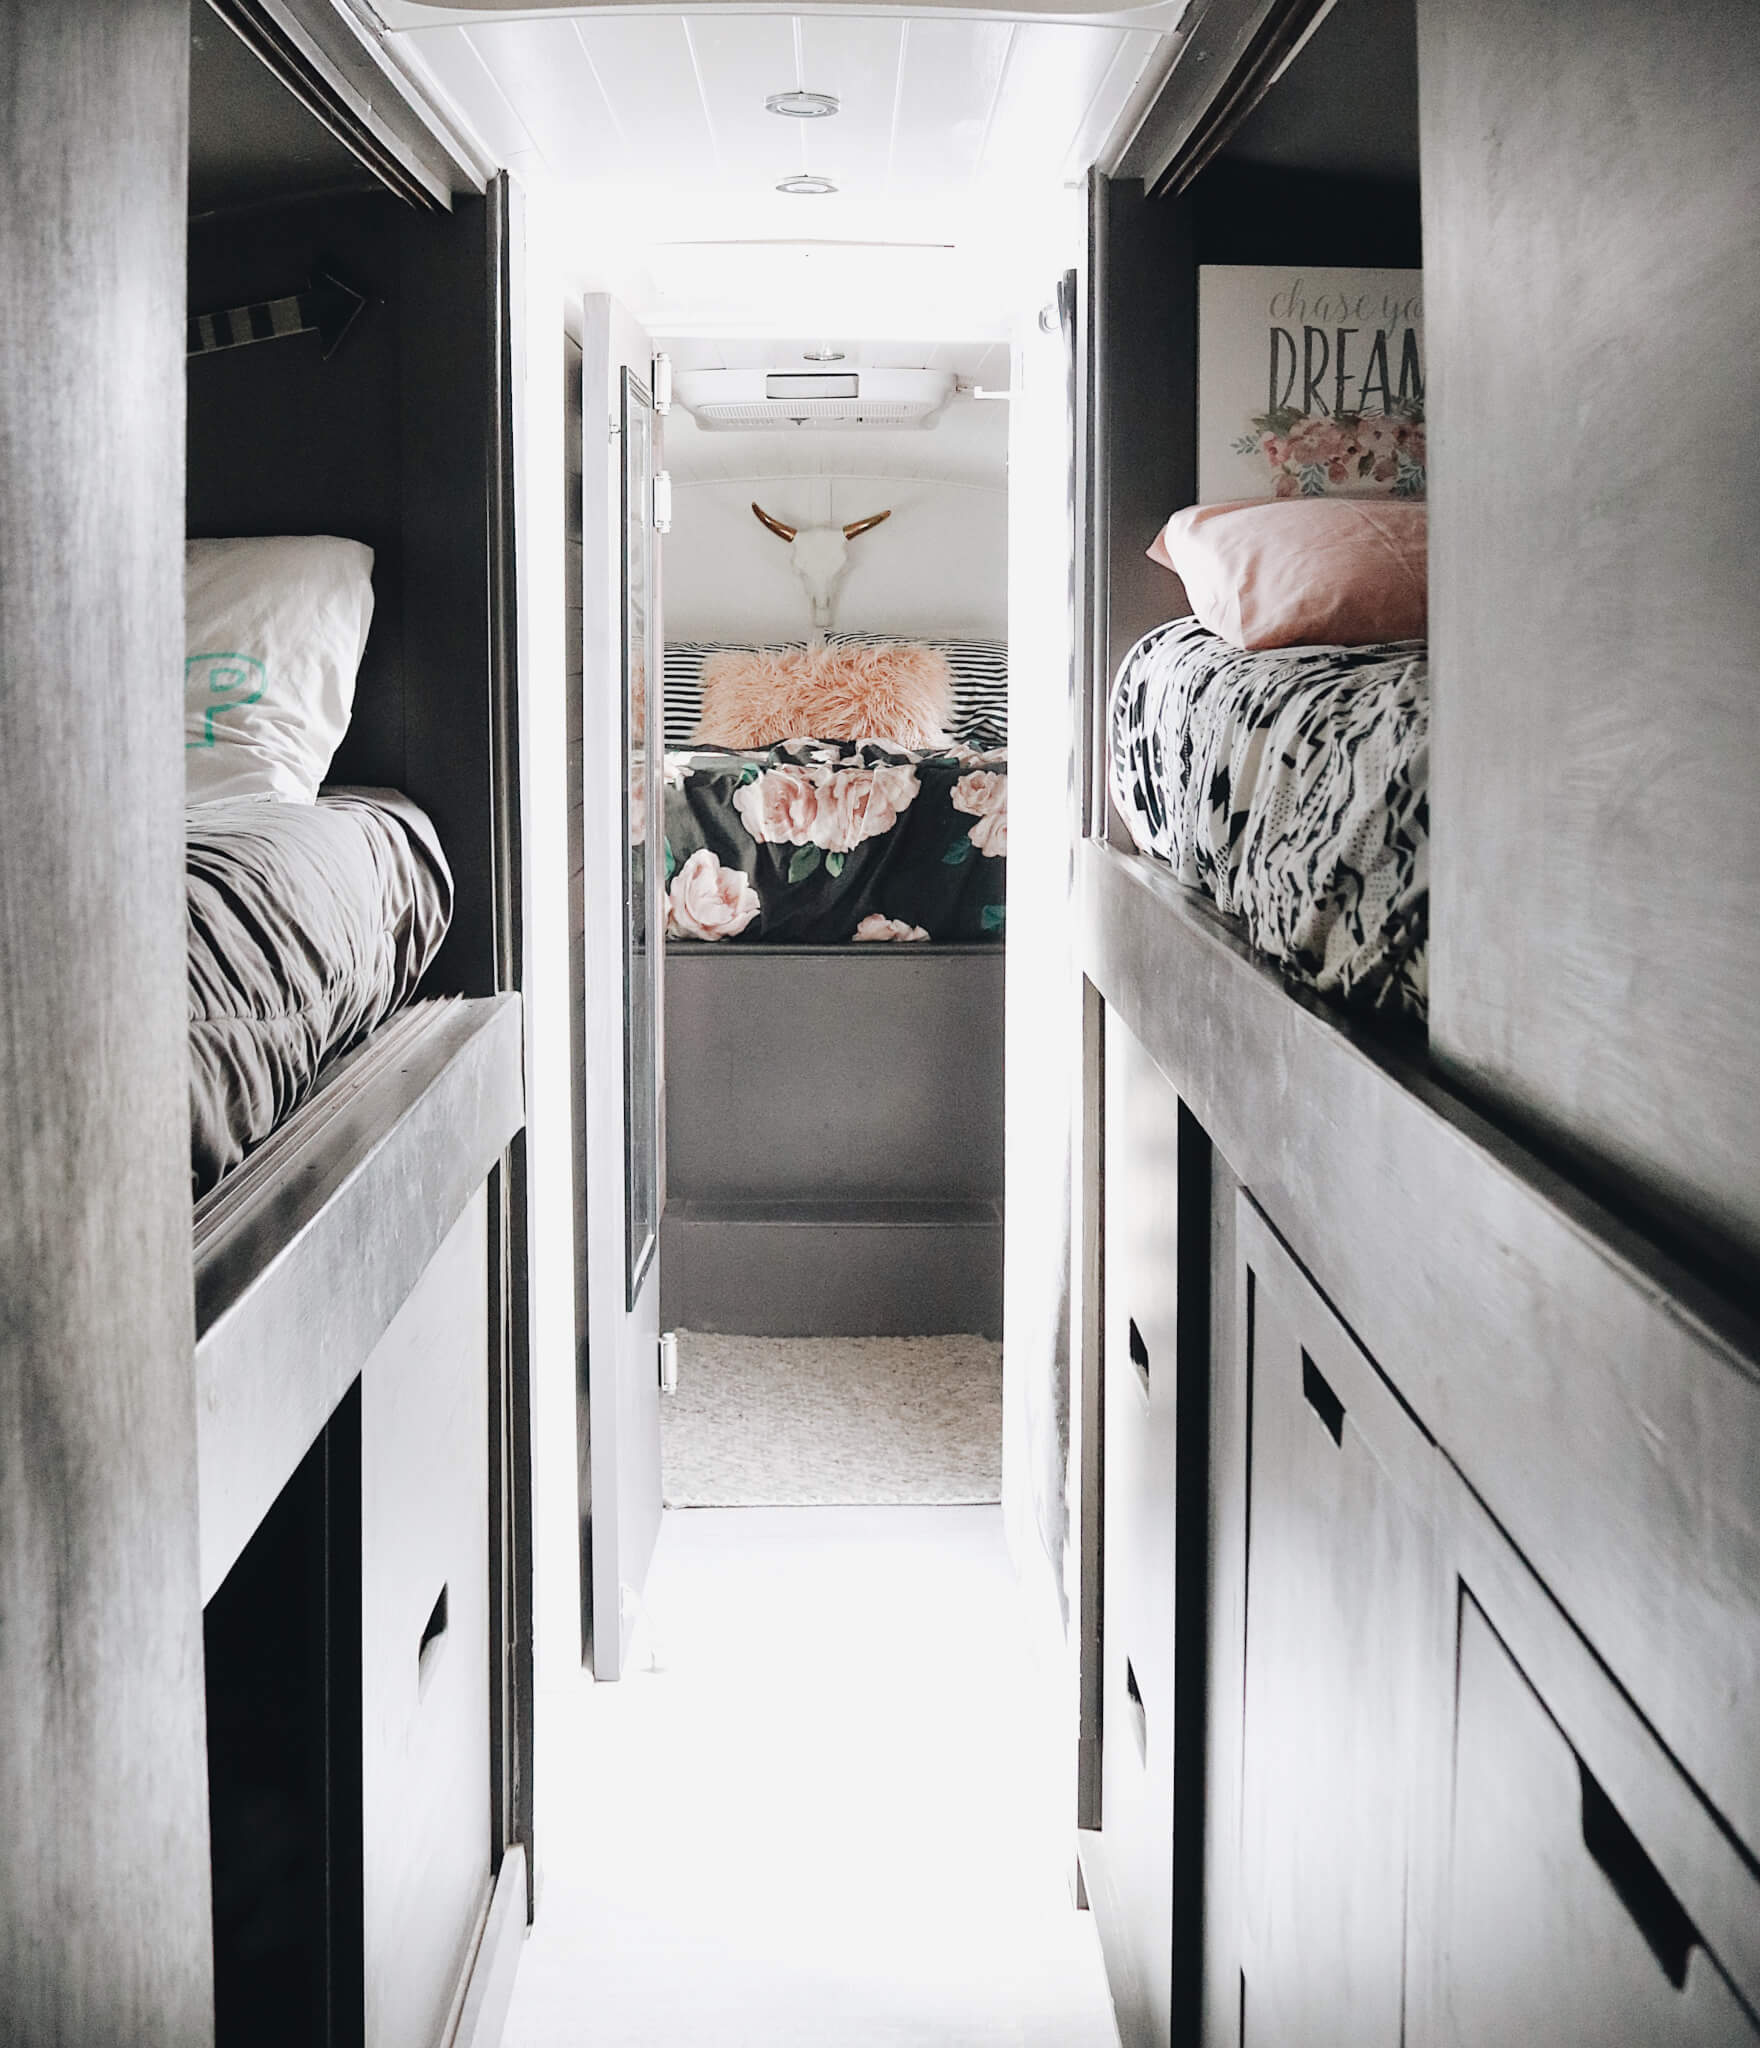 bunk beds in converted school bus